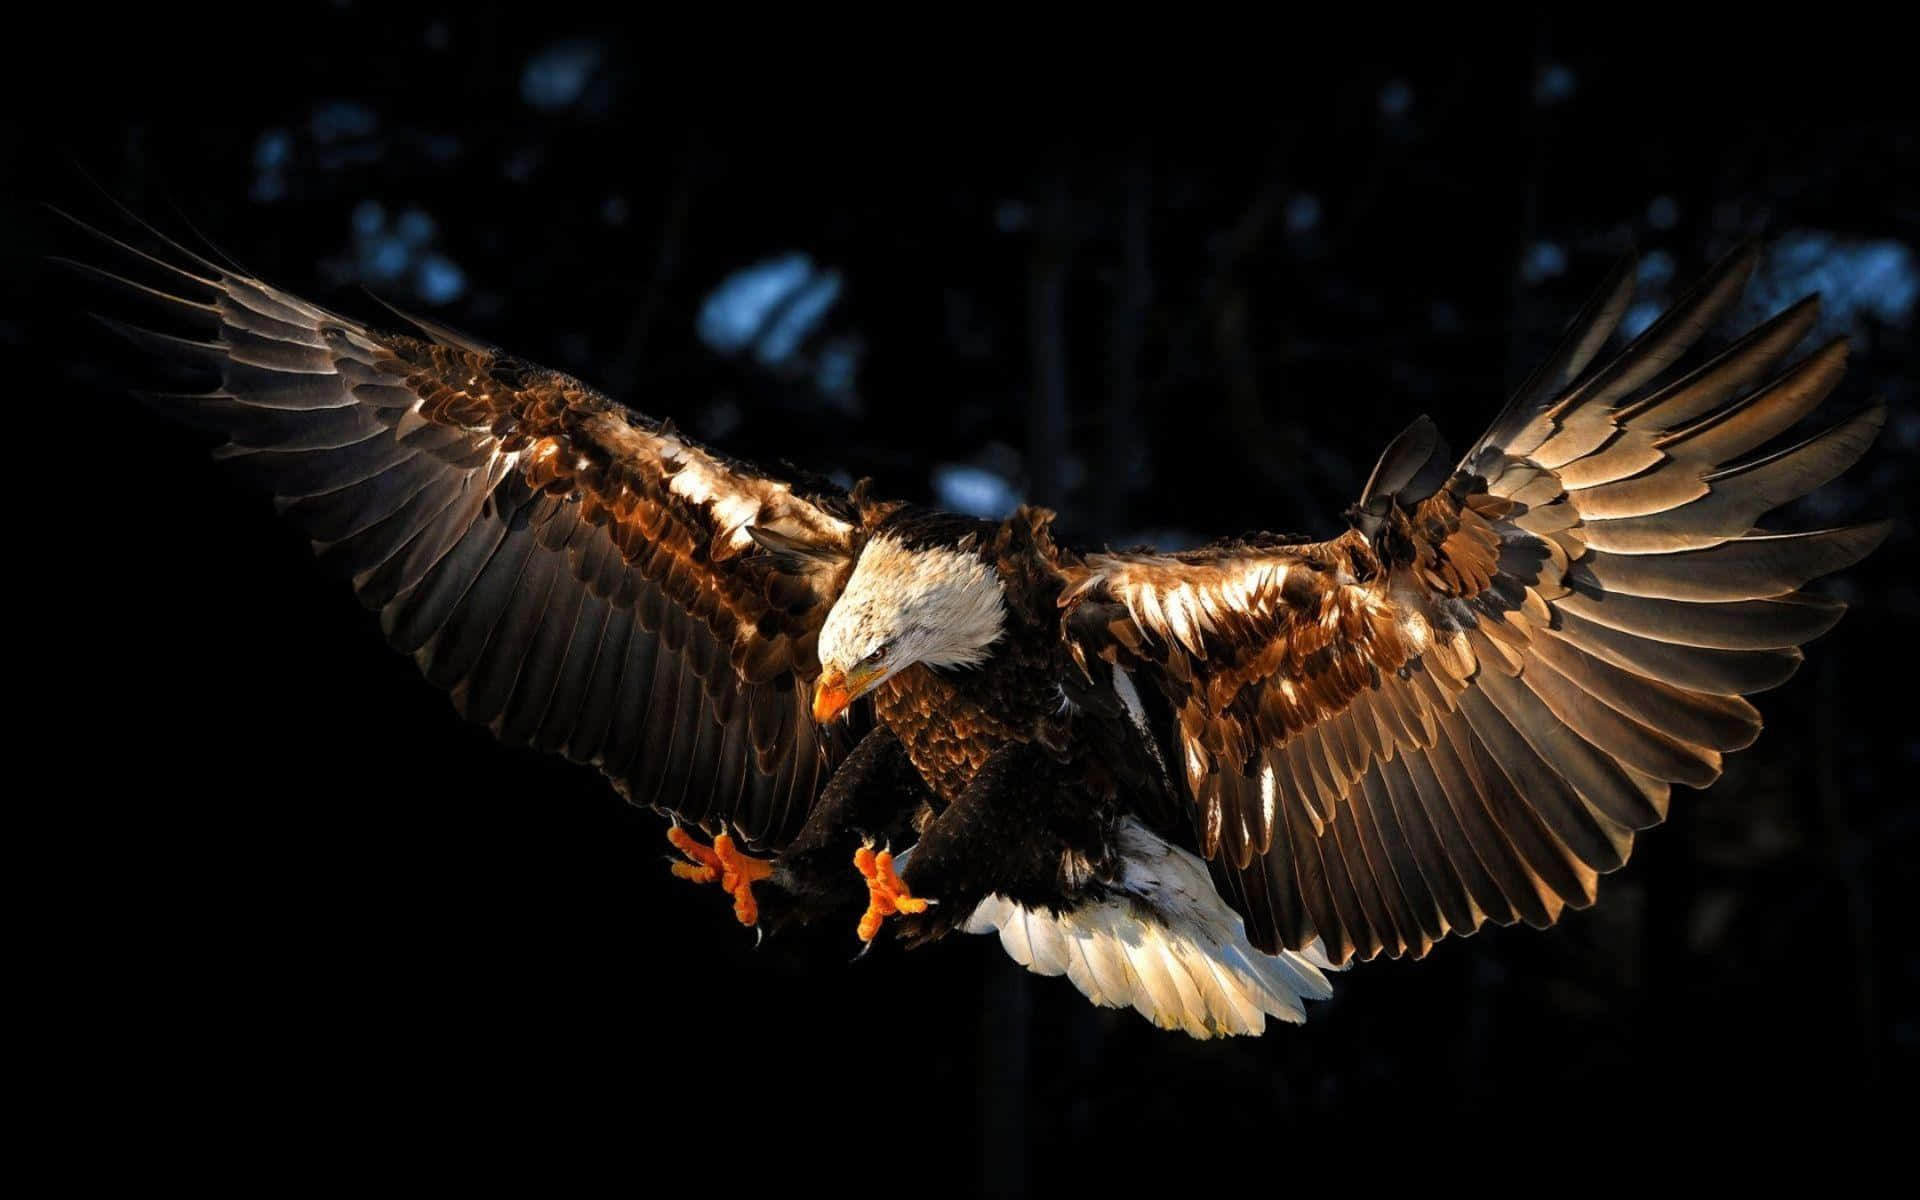 "The Majestic Eagle Soaring in Flight"